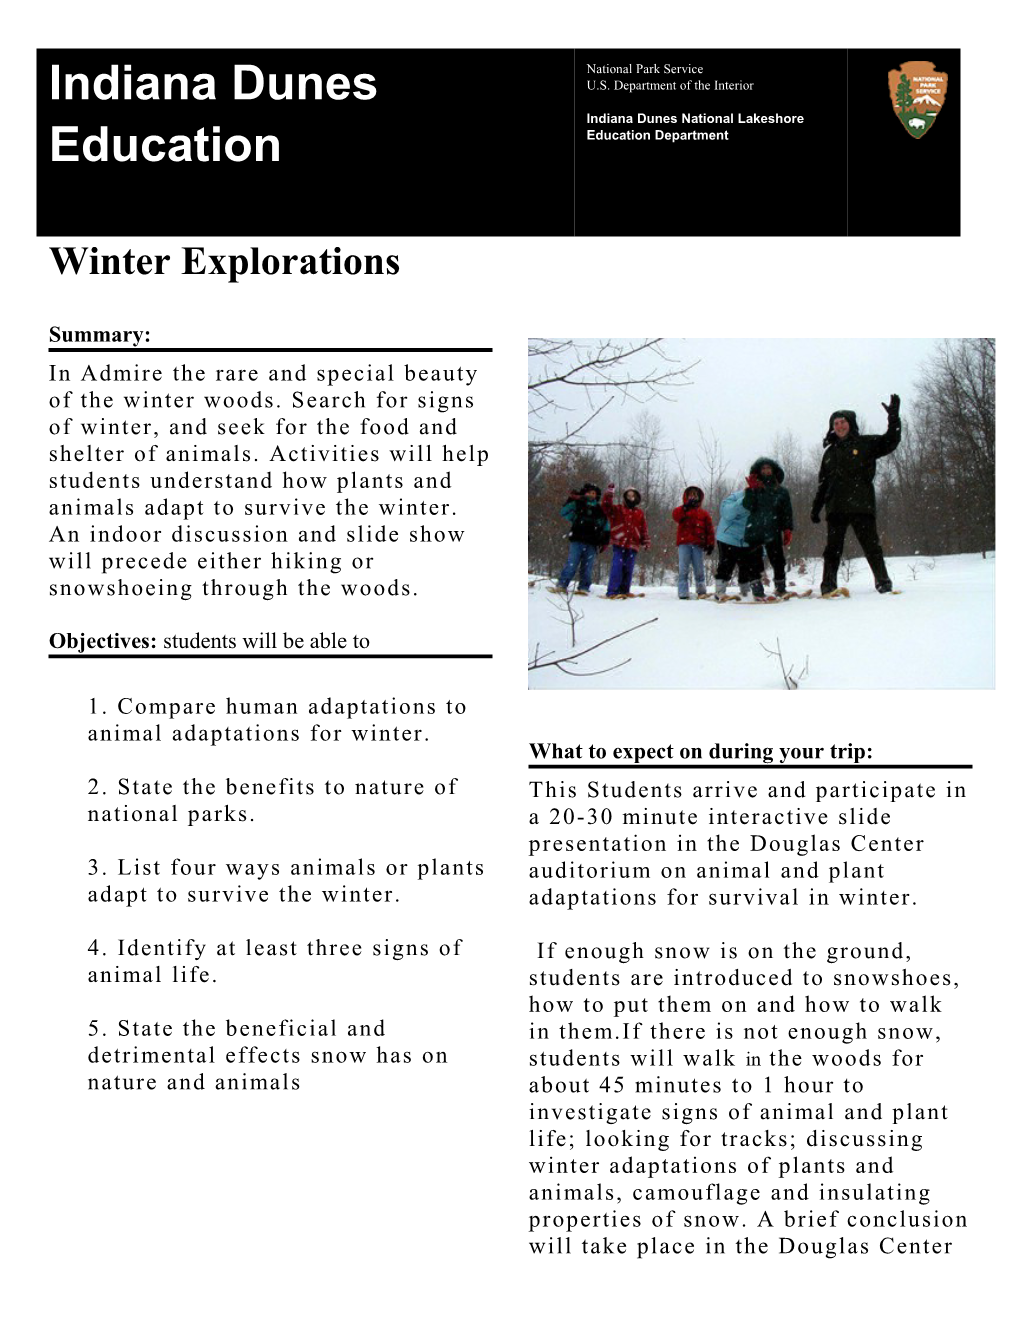 Winter Explorations